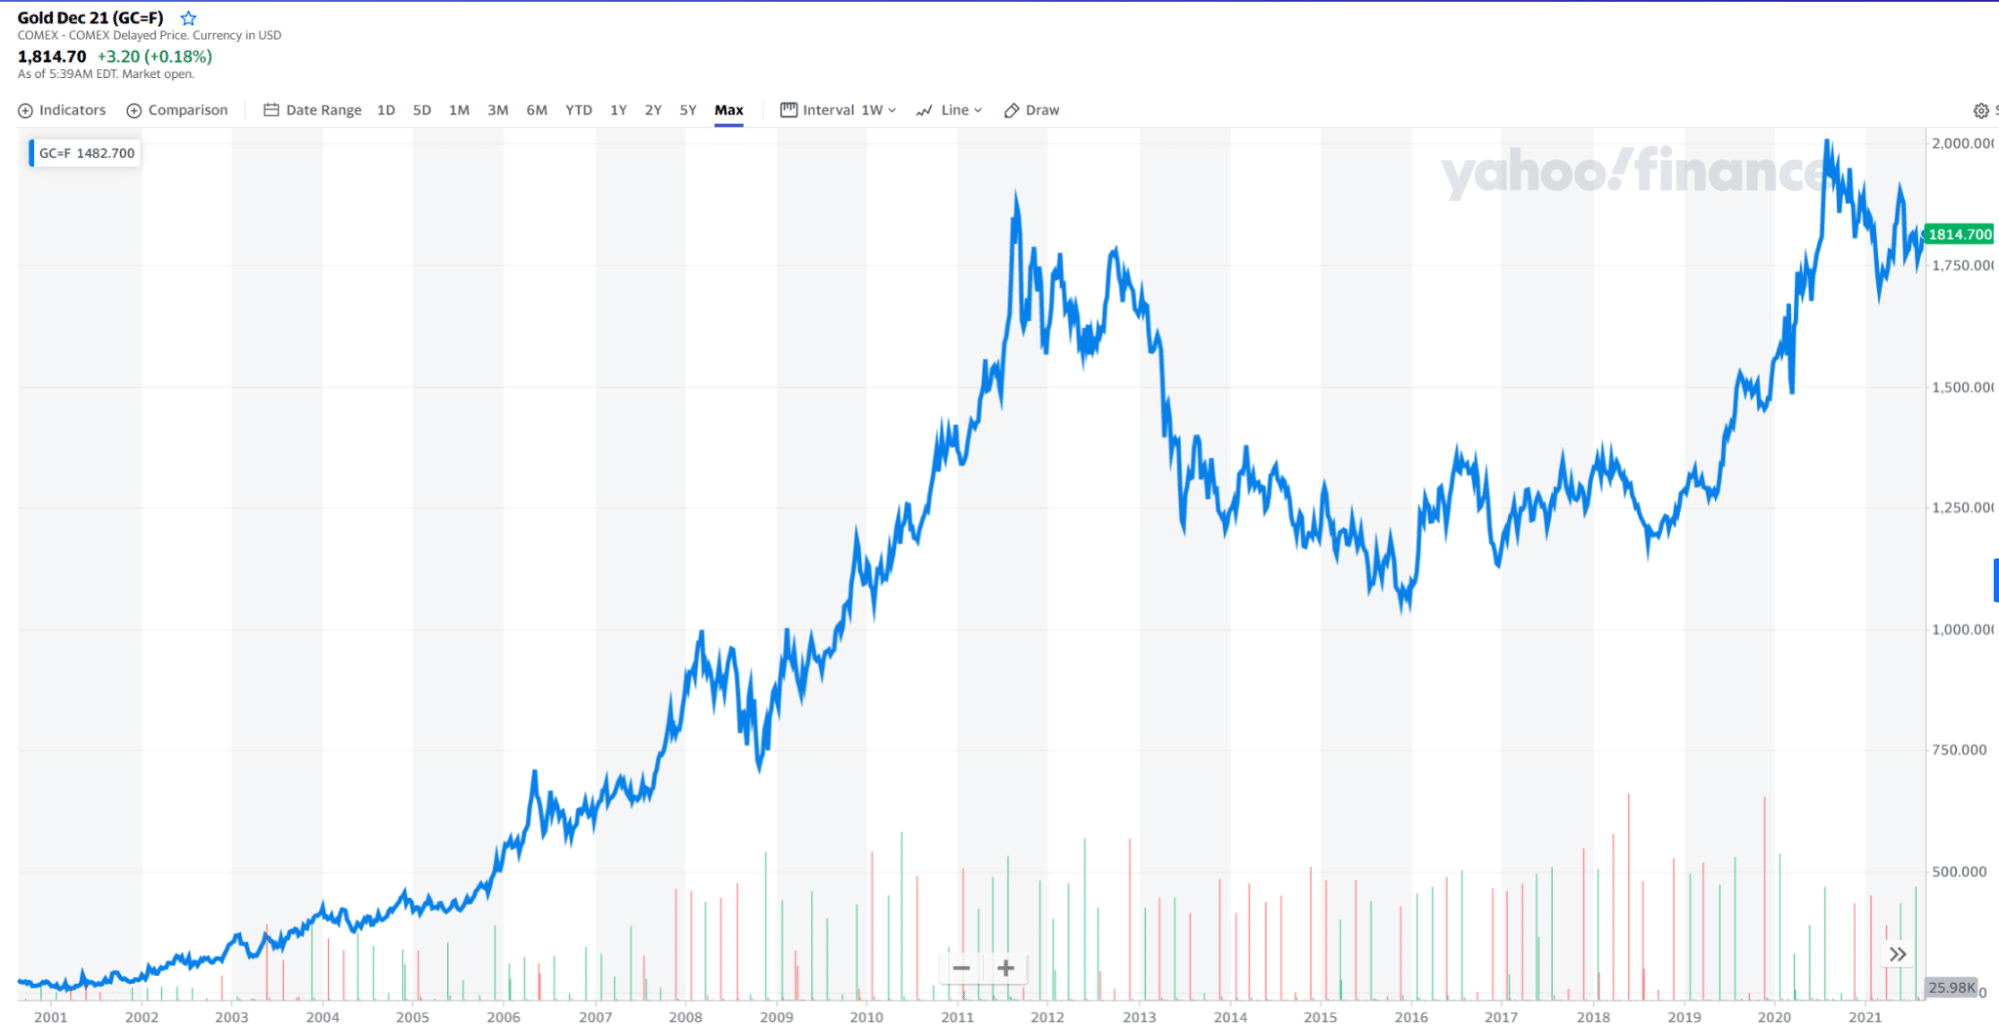 Gold price range since 2001